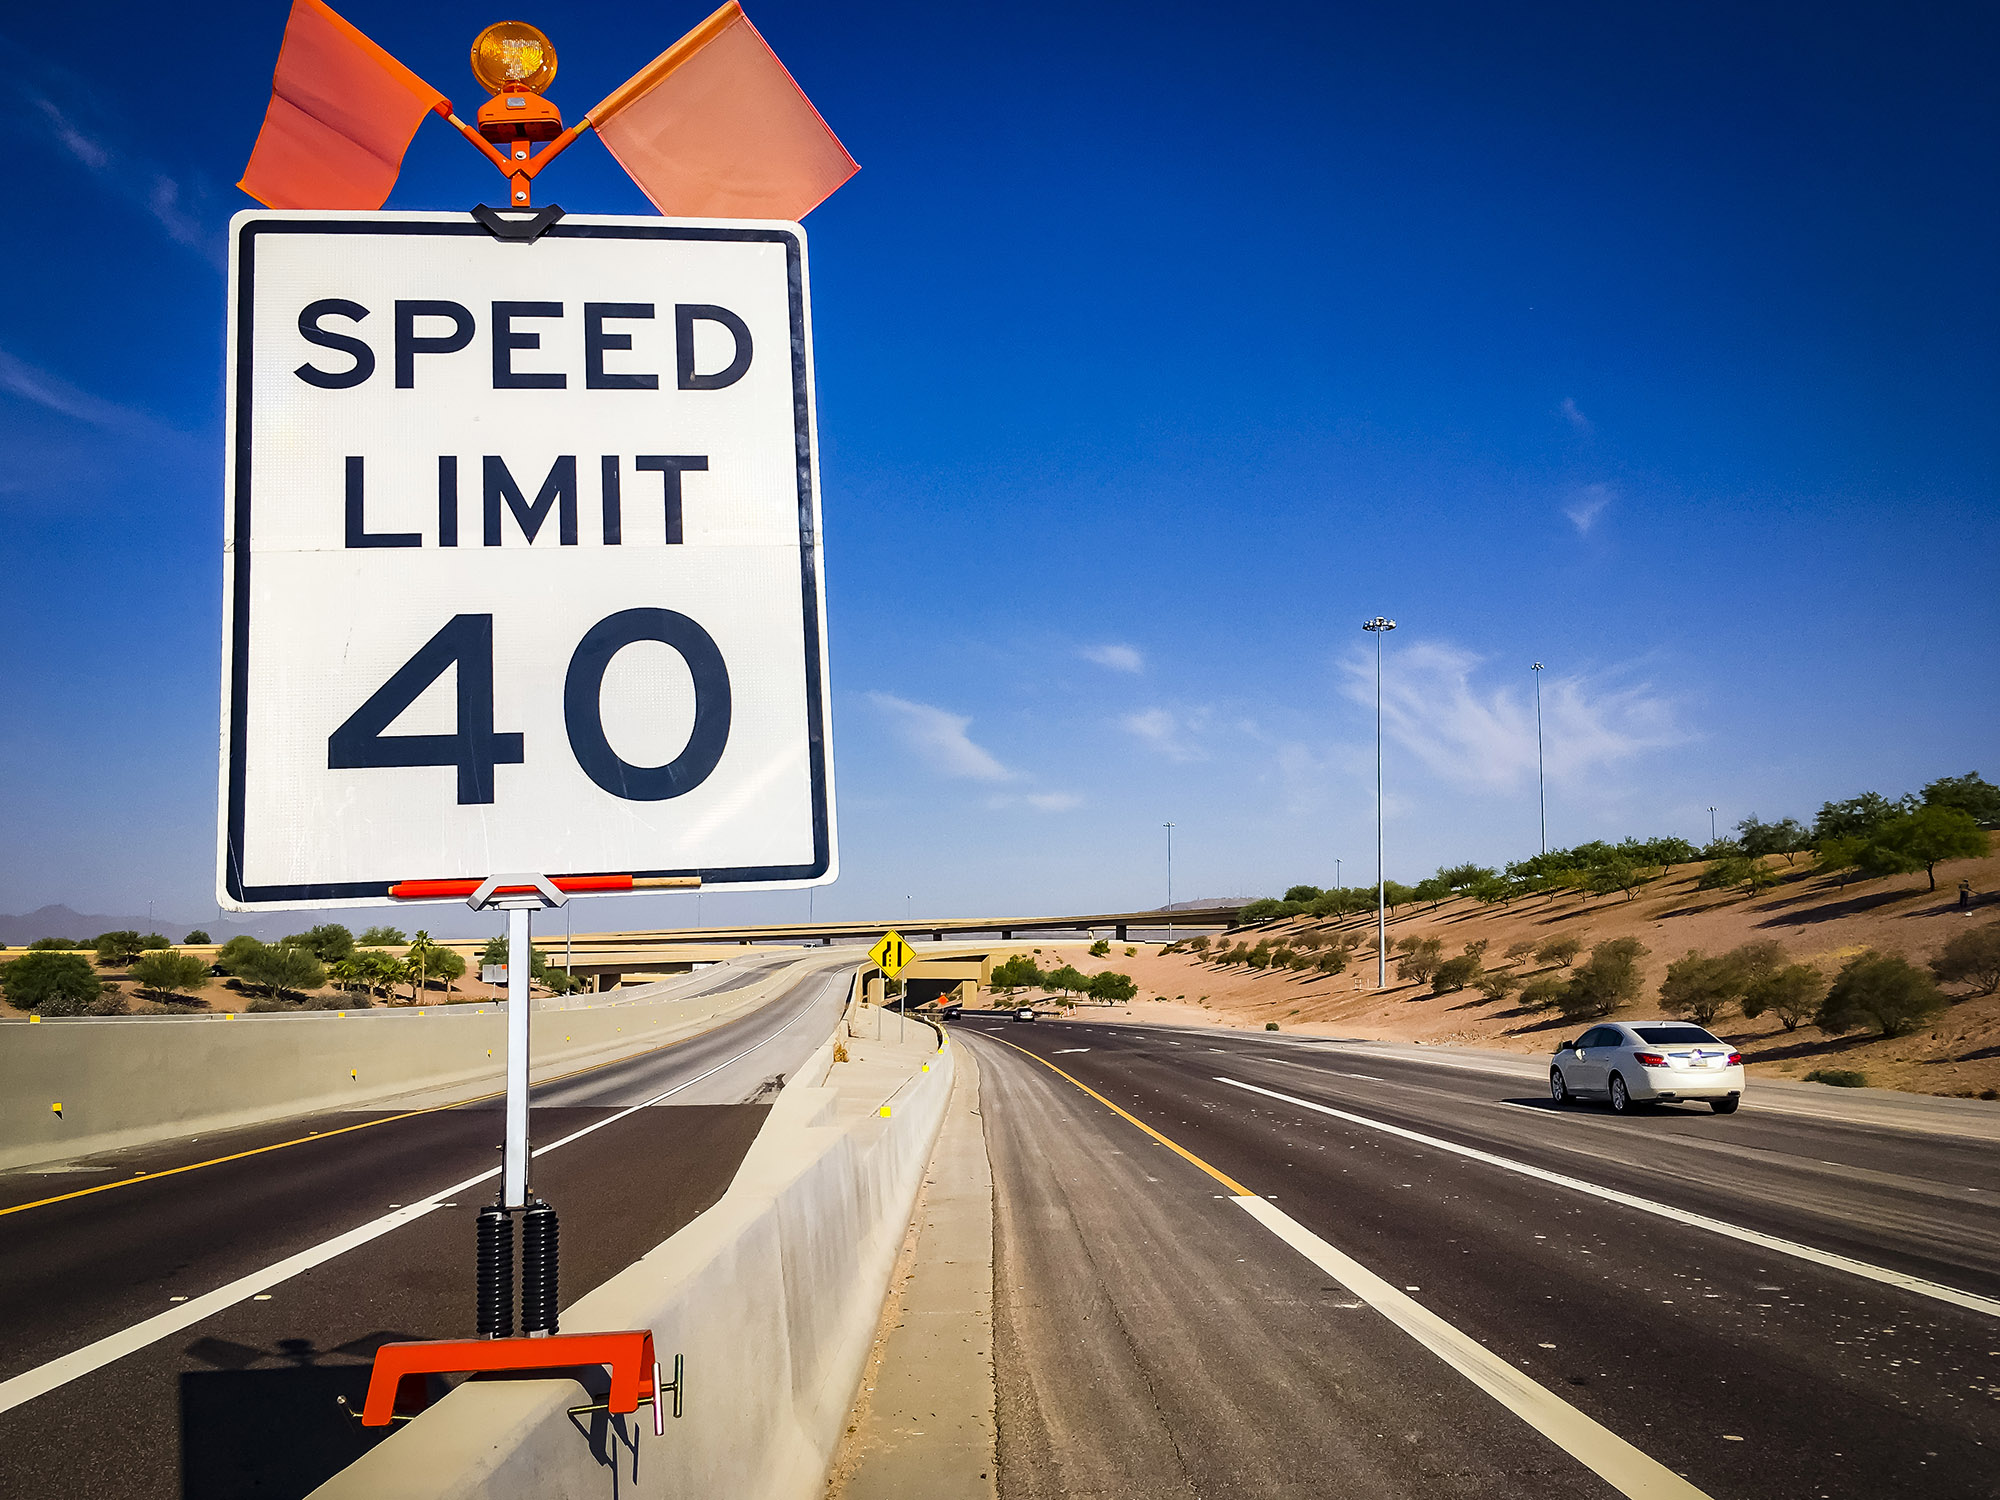 Спид лимитс. Speed limits. Speed limit sign. Speed limit - Speed limit (1974). Speed limit sign in USA.